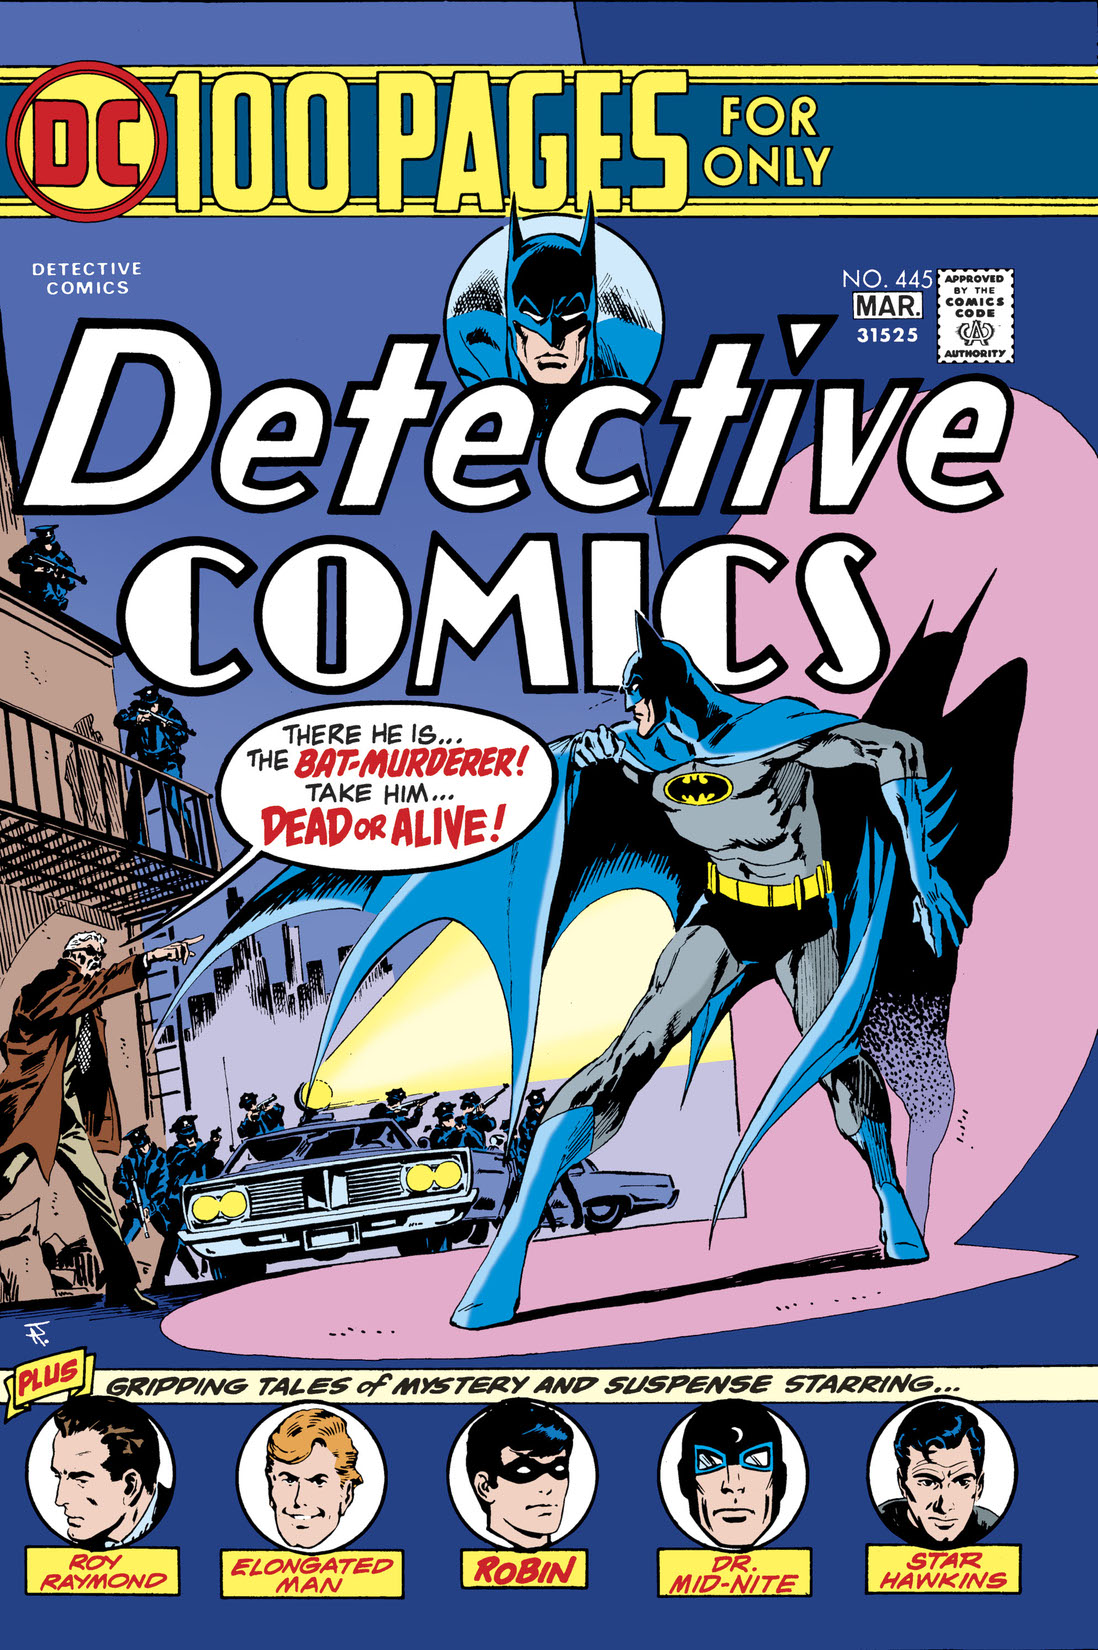 Detective Comics (1937-) #445 preview images